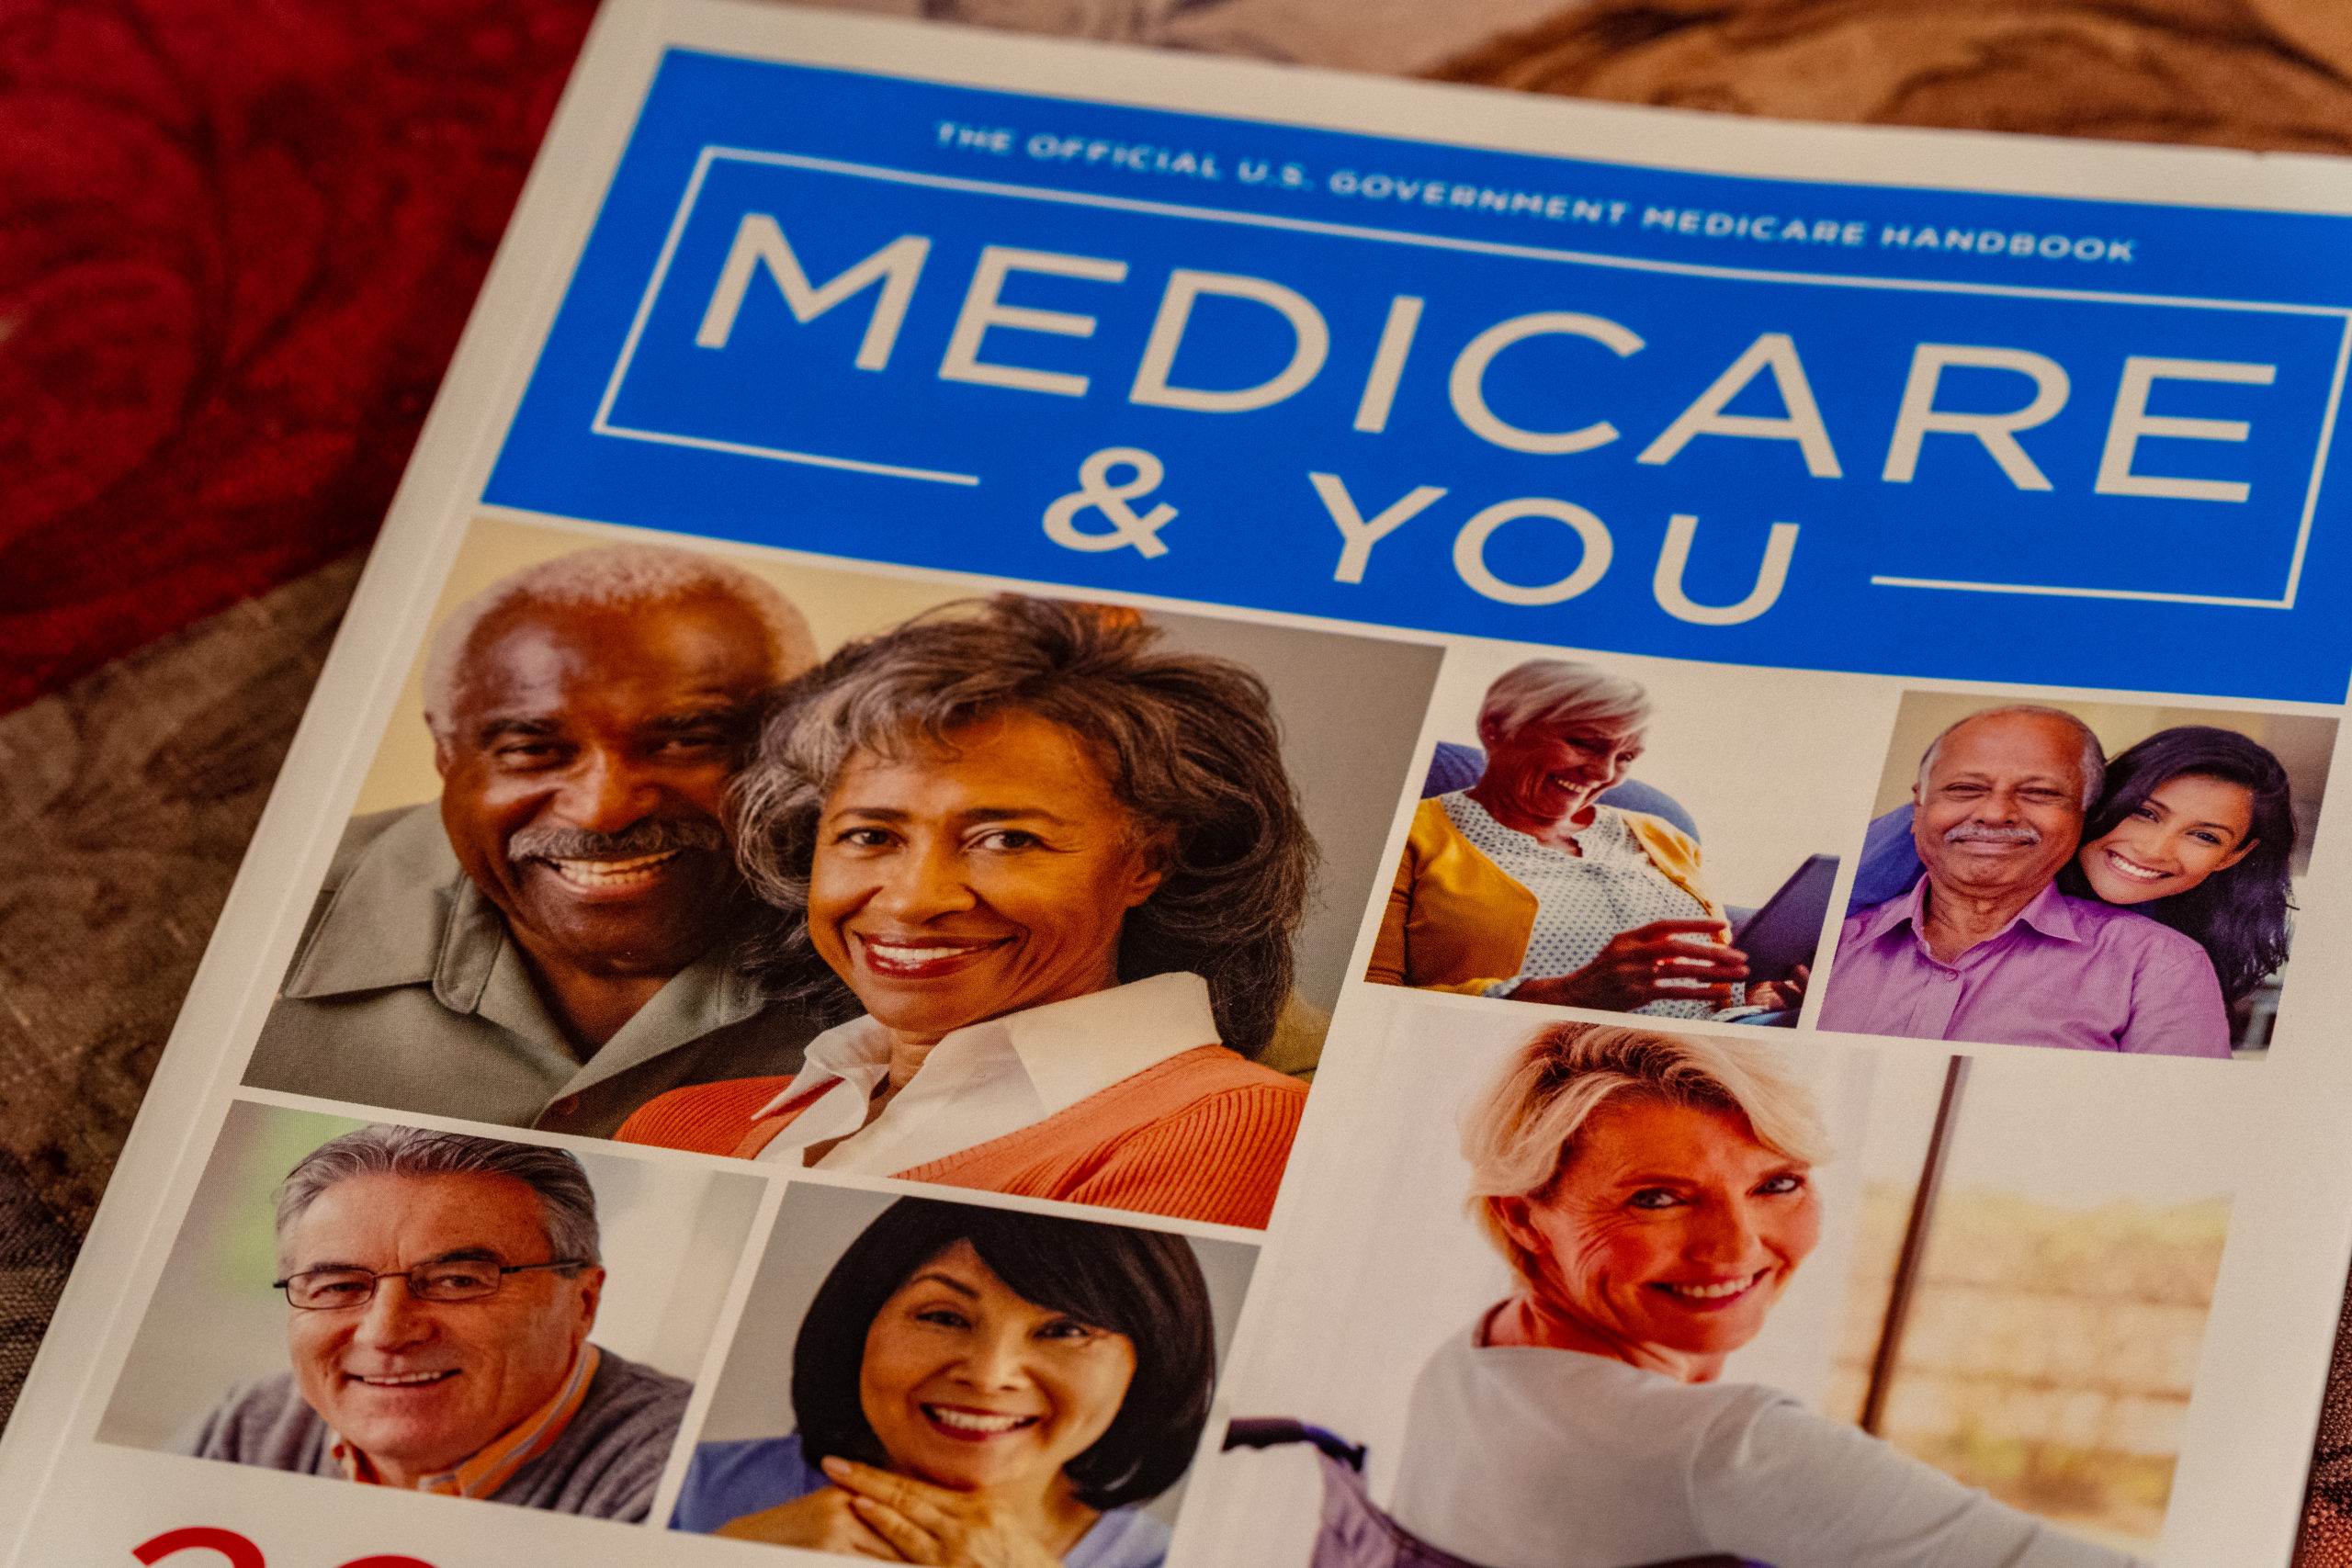 Download the most recent Medicare & You Handbook